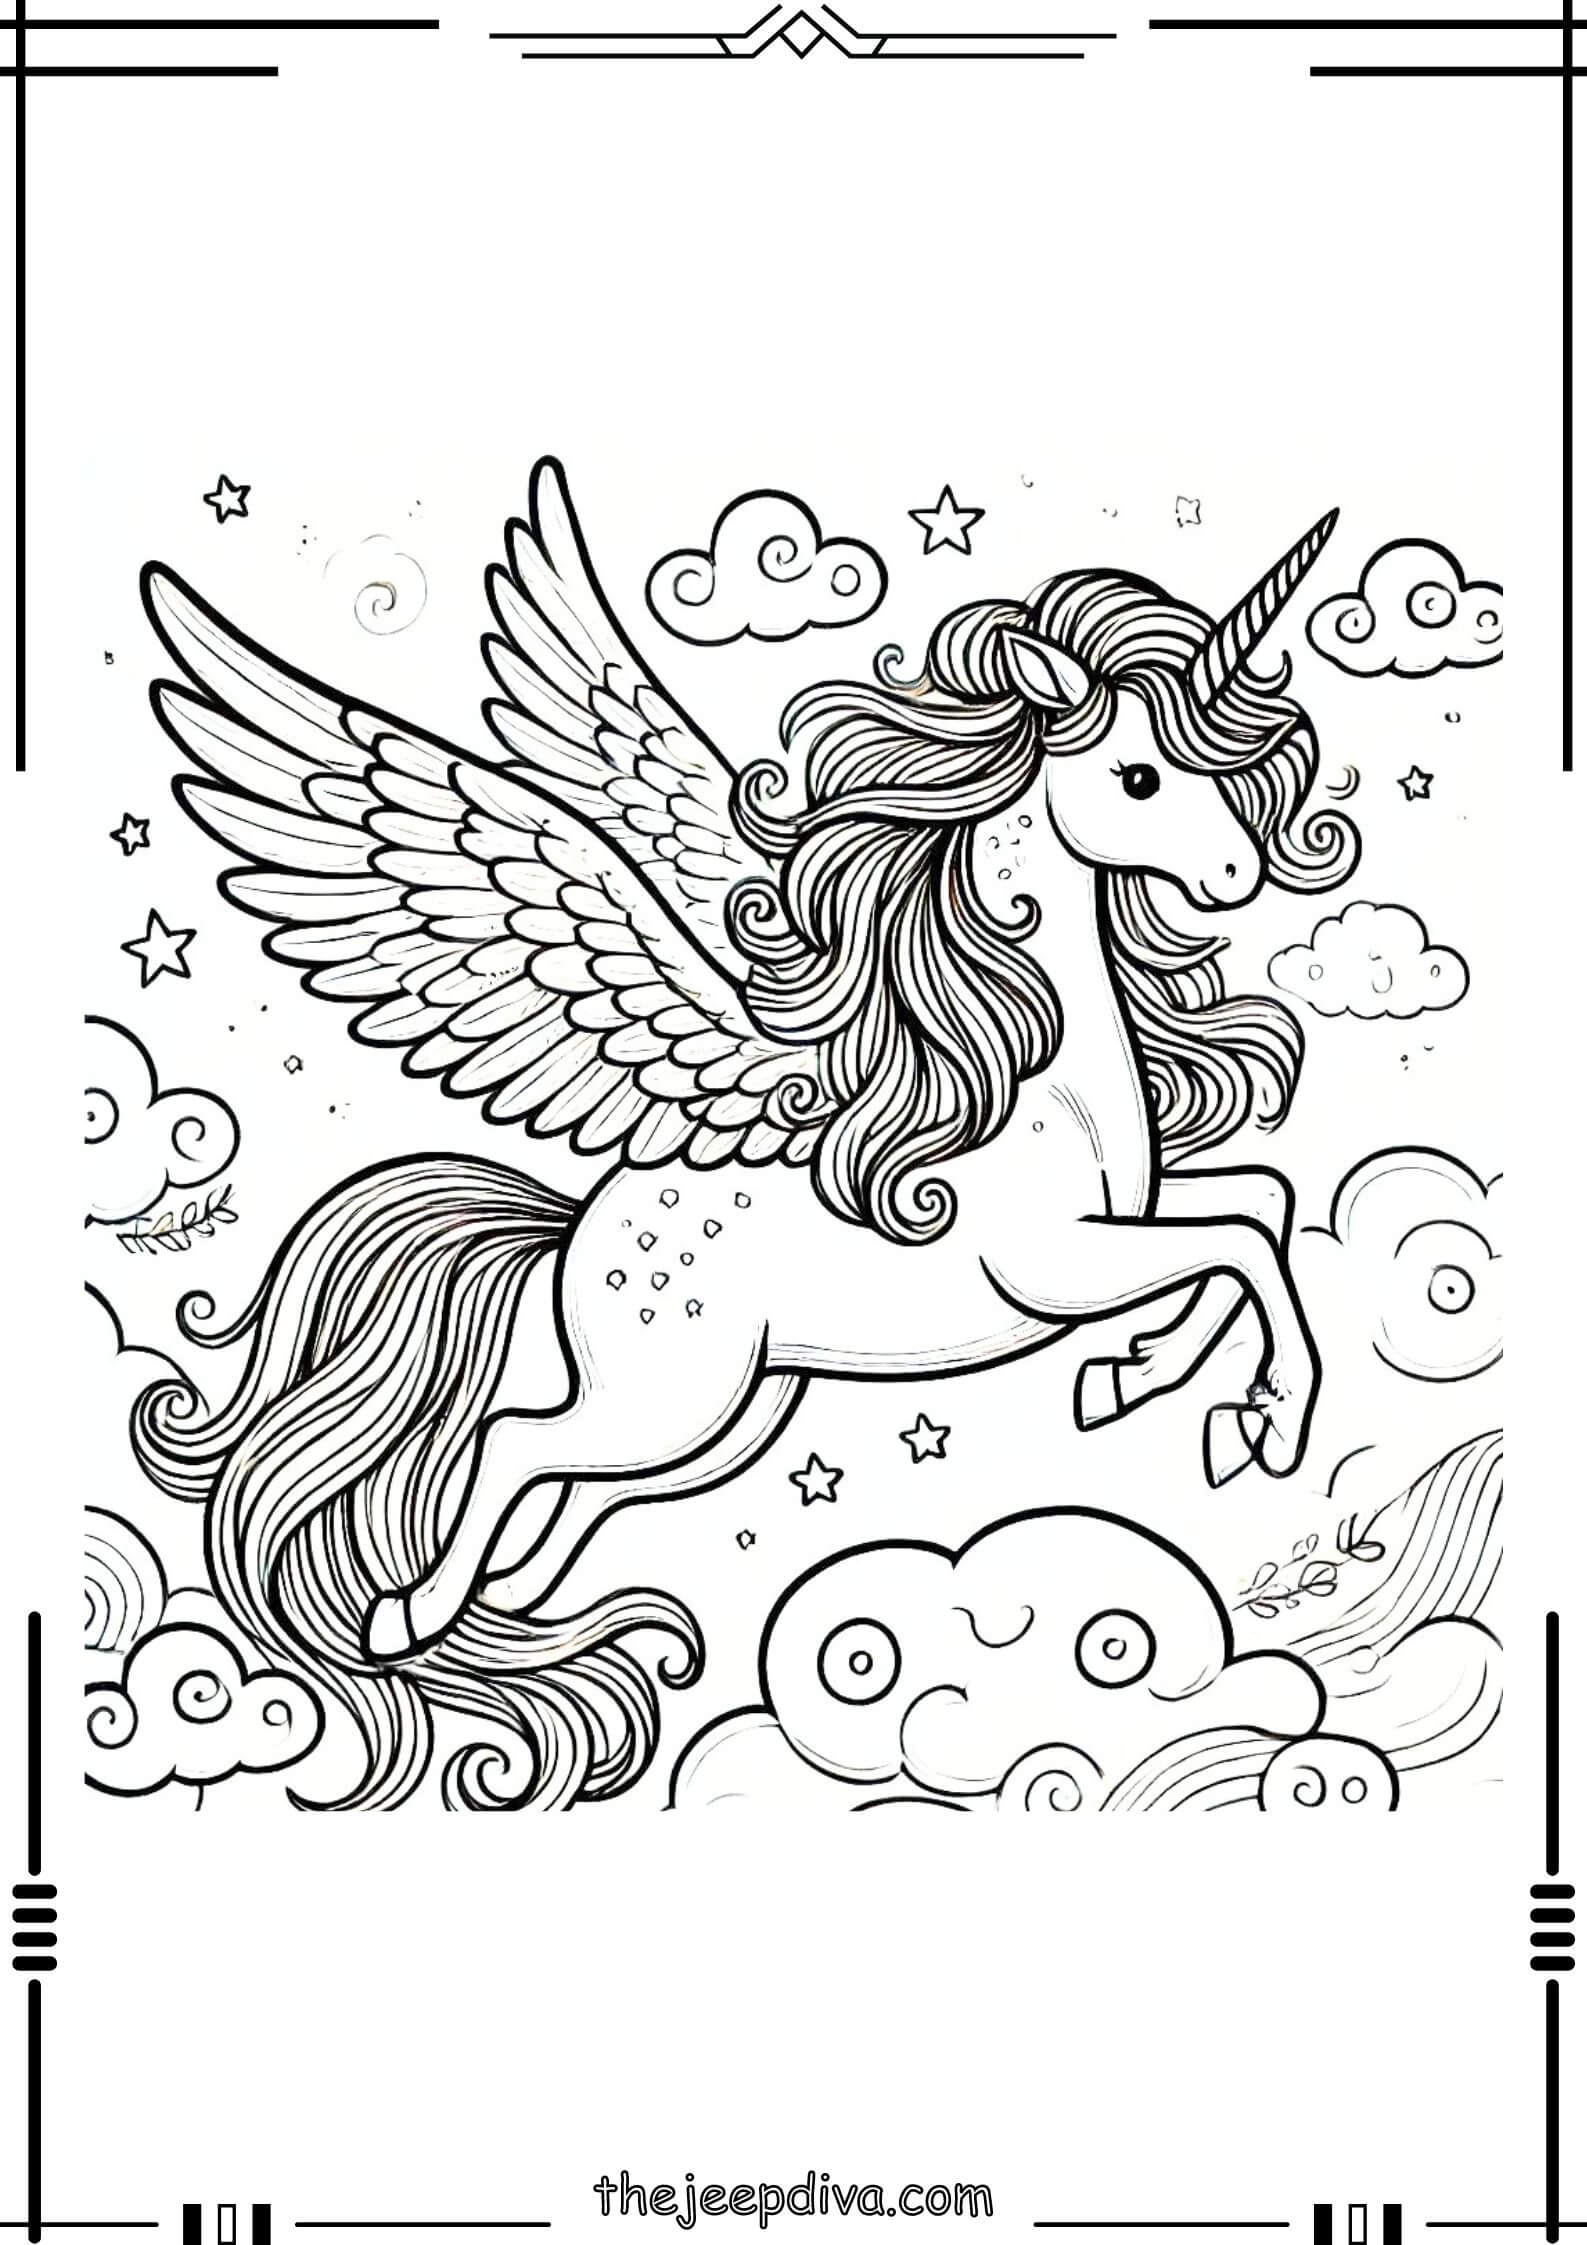 unicorn-coloring-page-hard-19